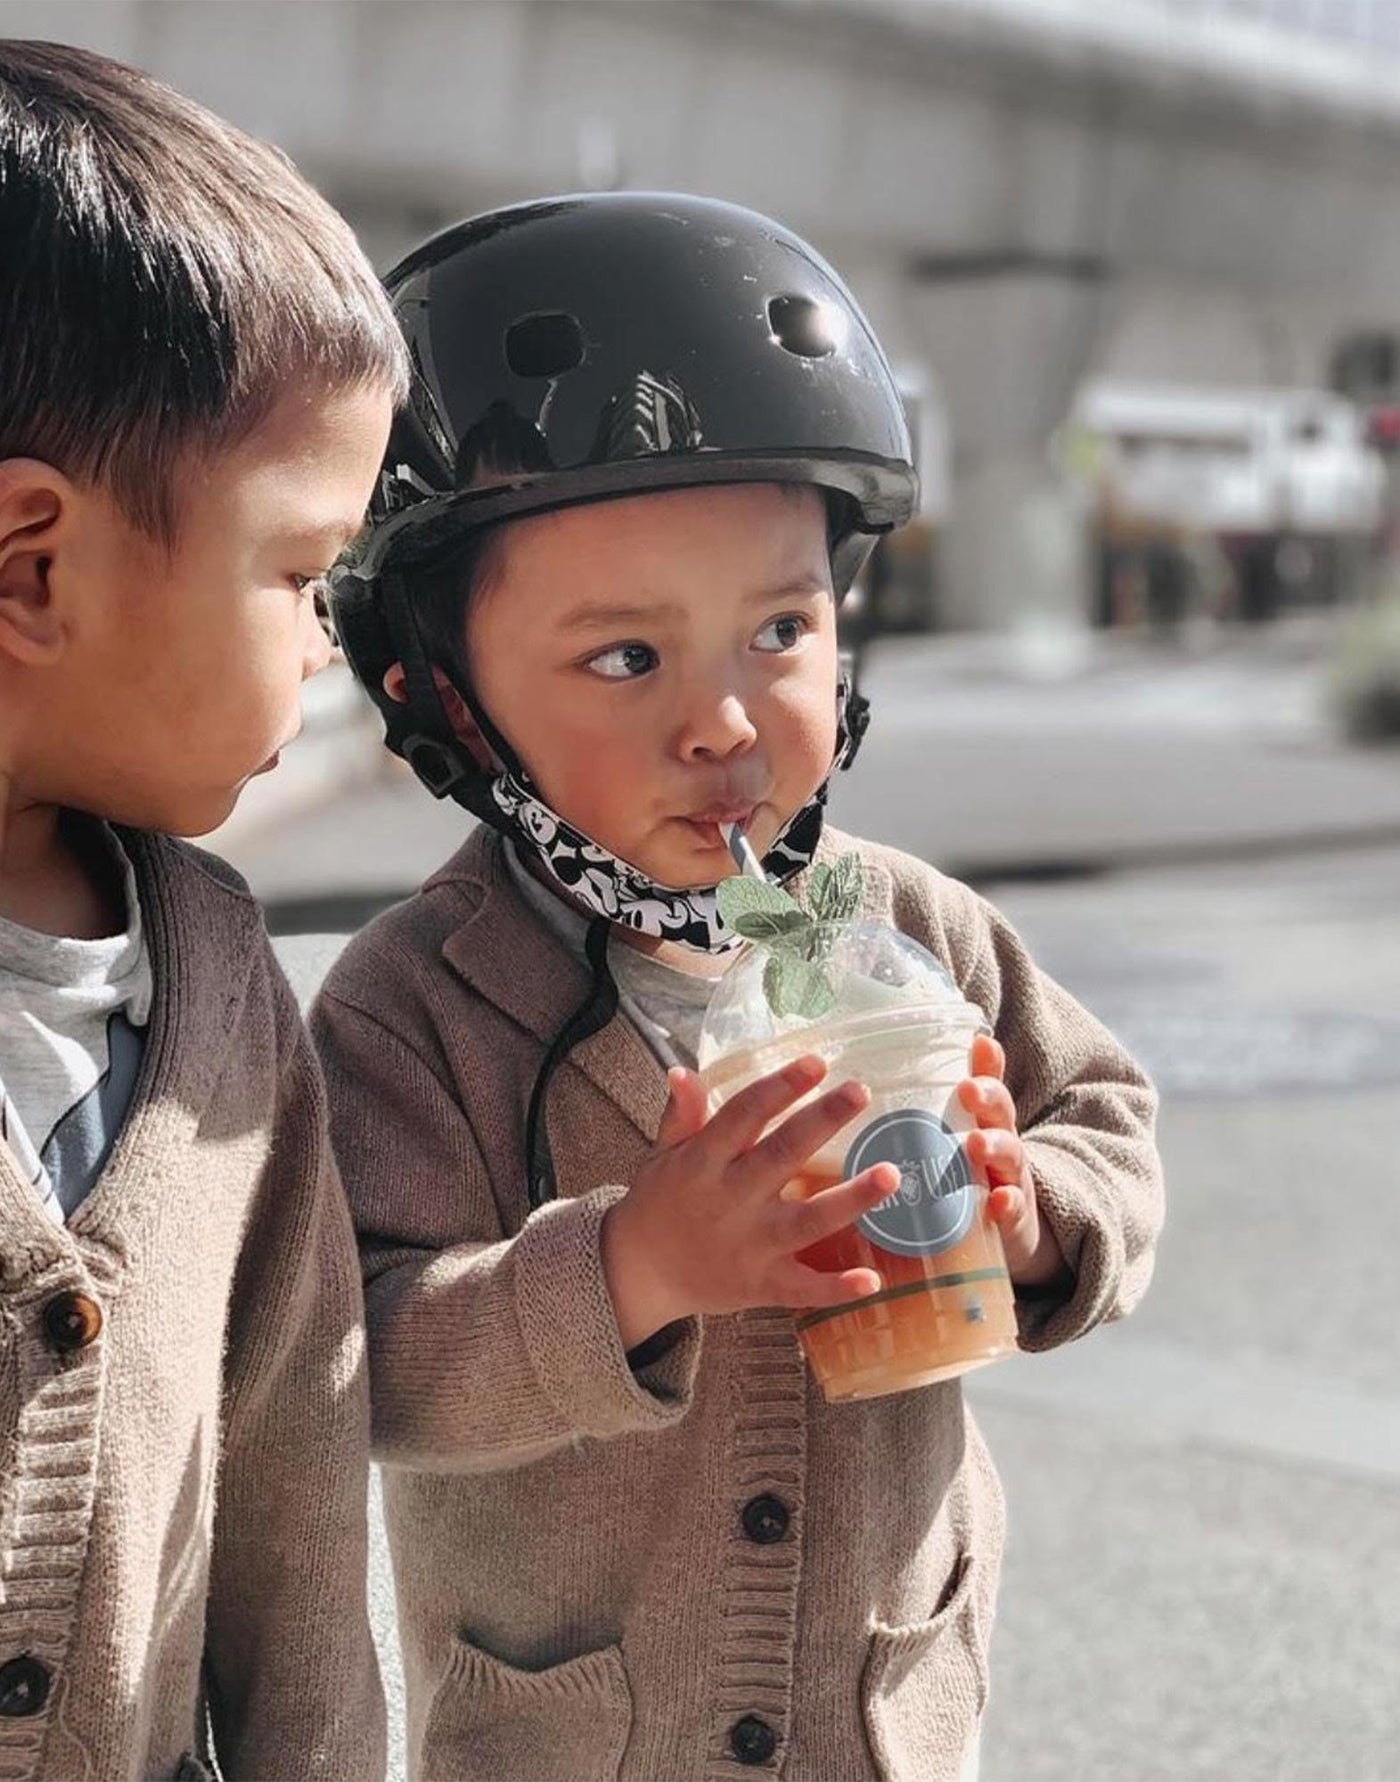 Micro Kids Bike Helmet Classic